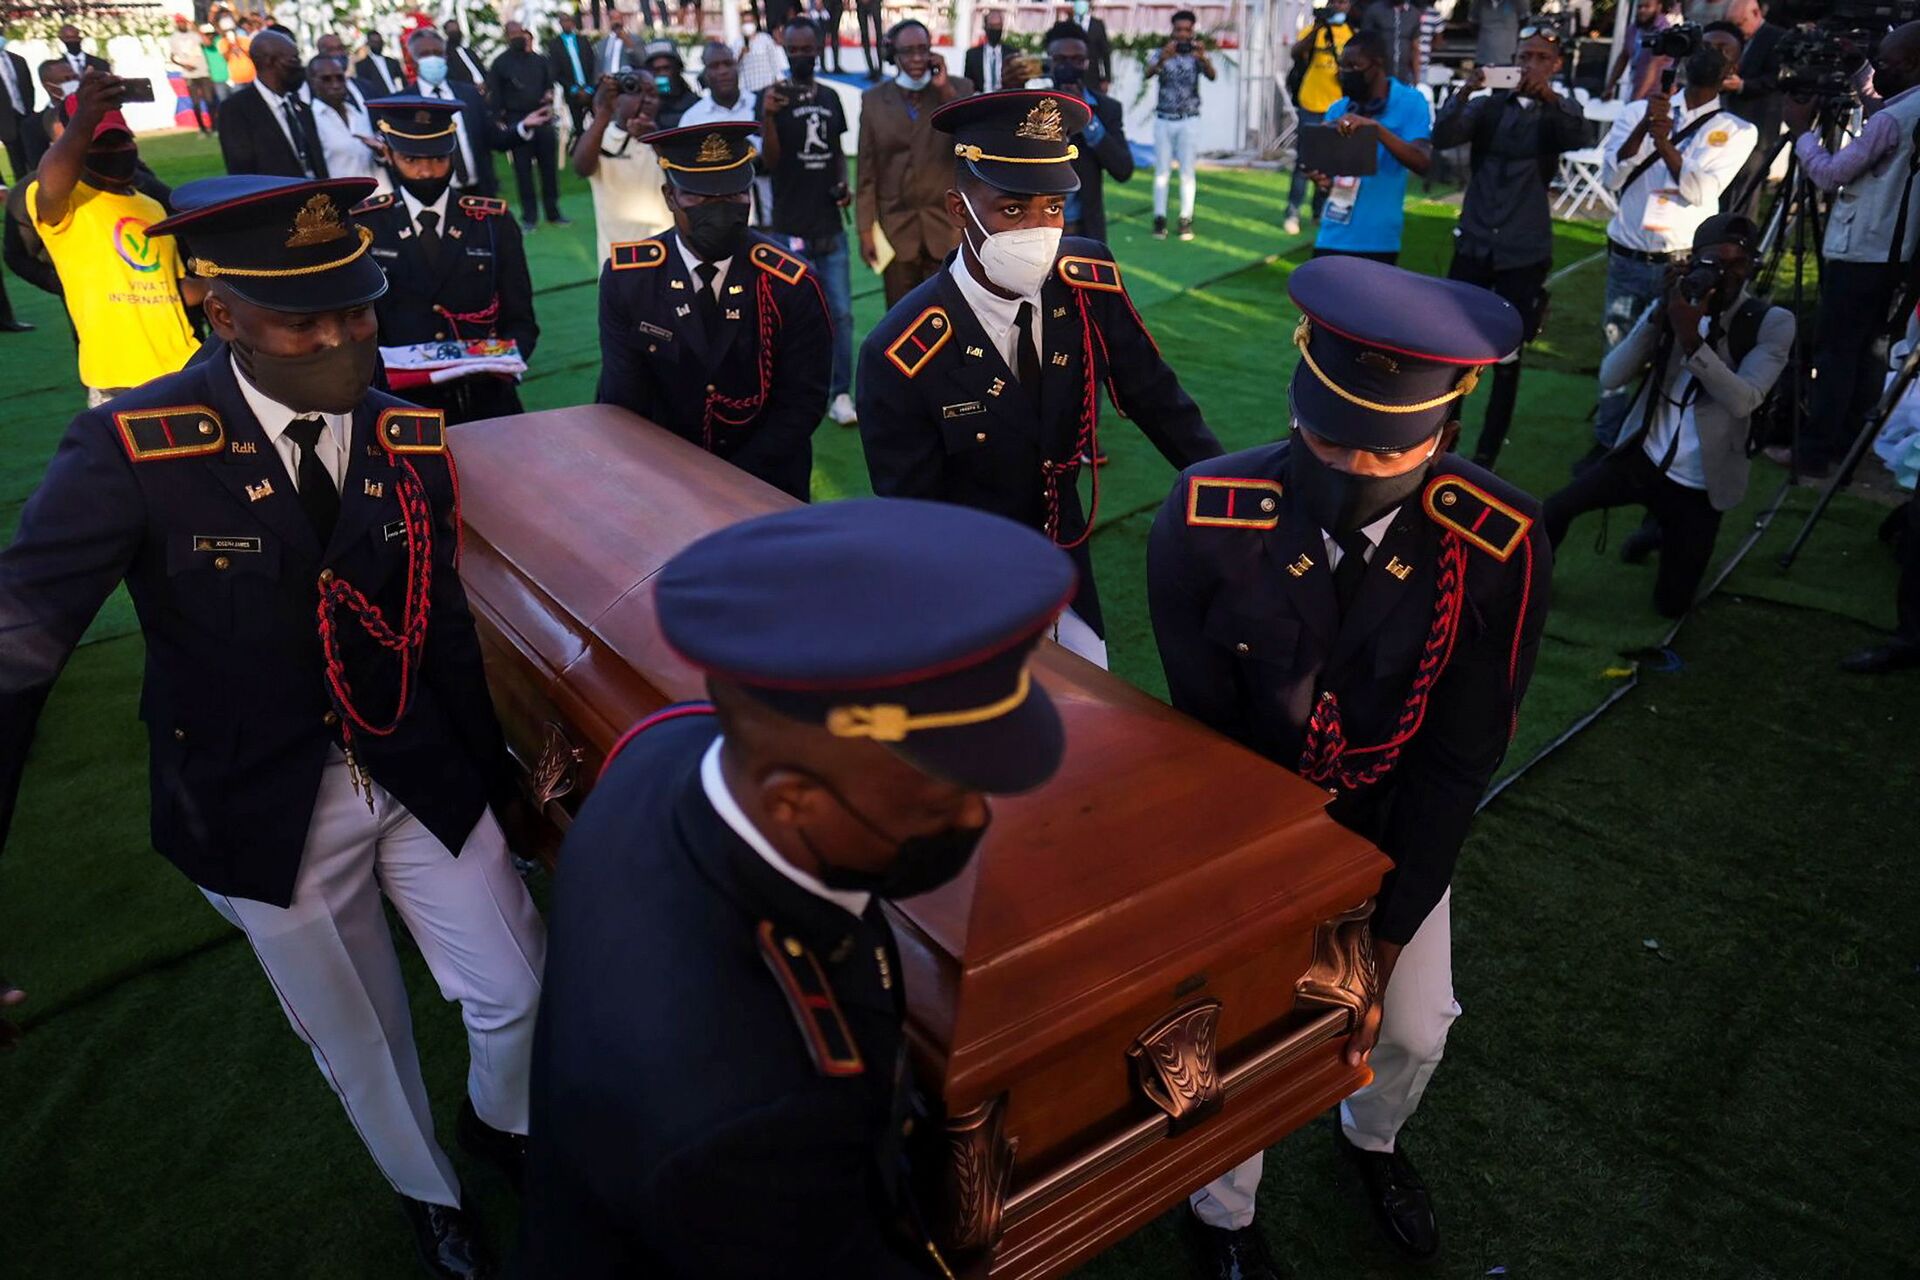 Haiti: tiros e tumulto marcam funeral do presidente assassinado Jovenel Moïse (FOTOS) - Sputnik Brasil, 1920, 23.07.2021